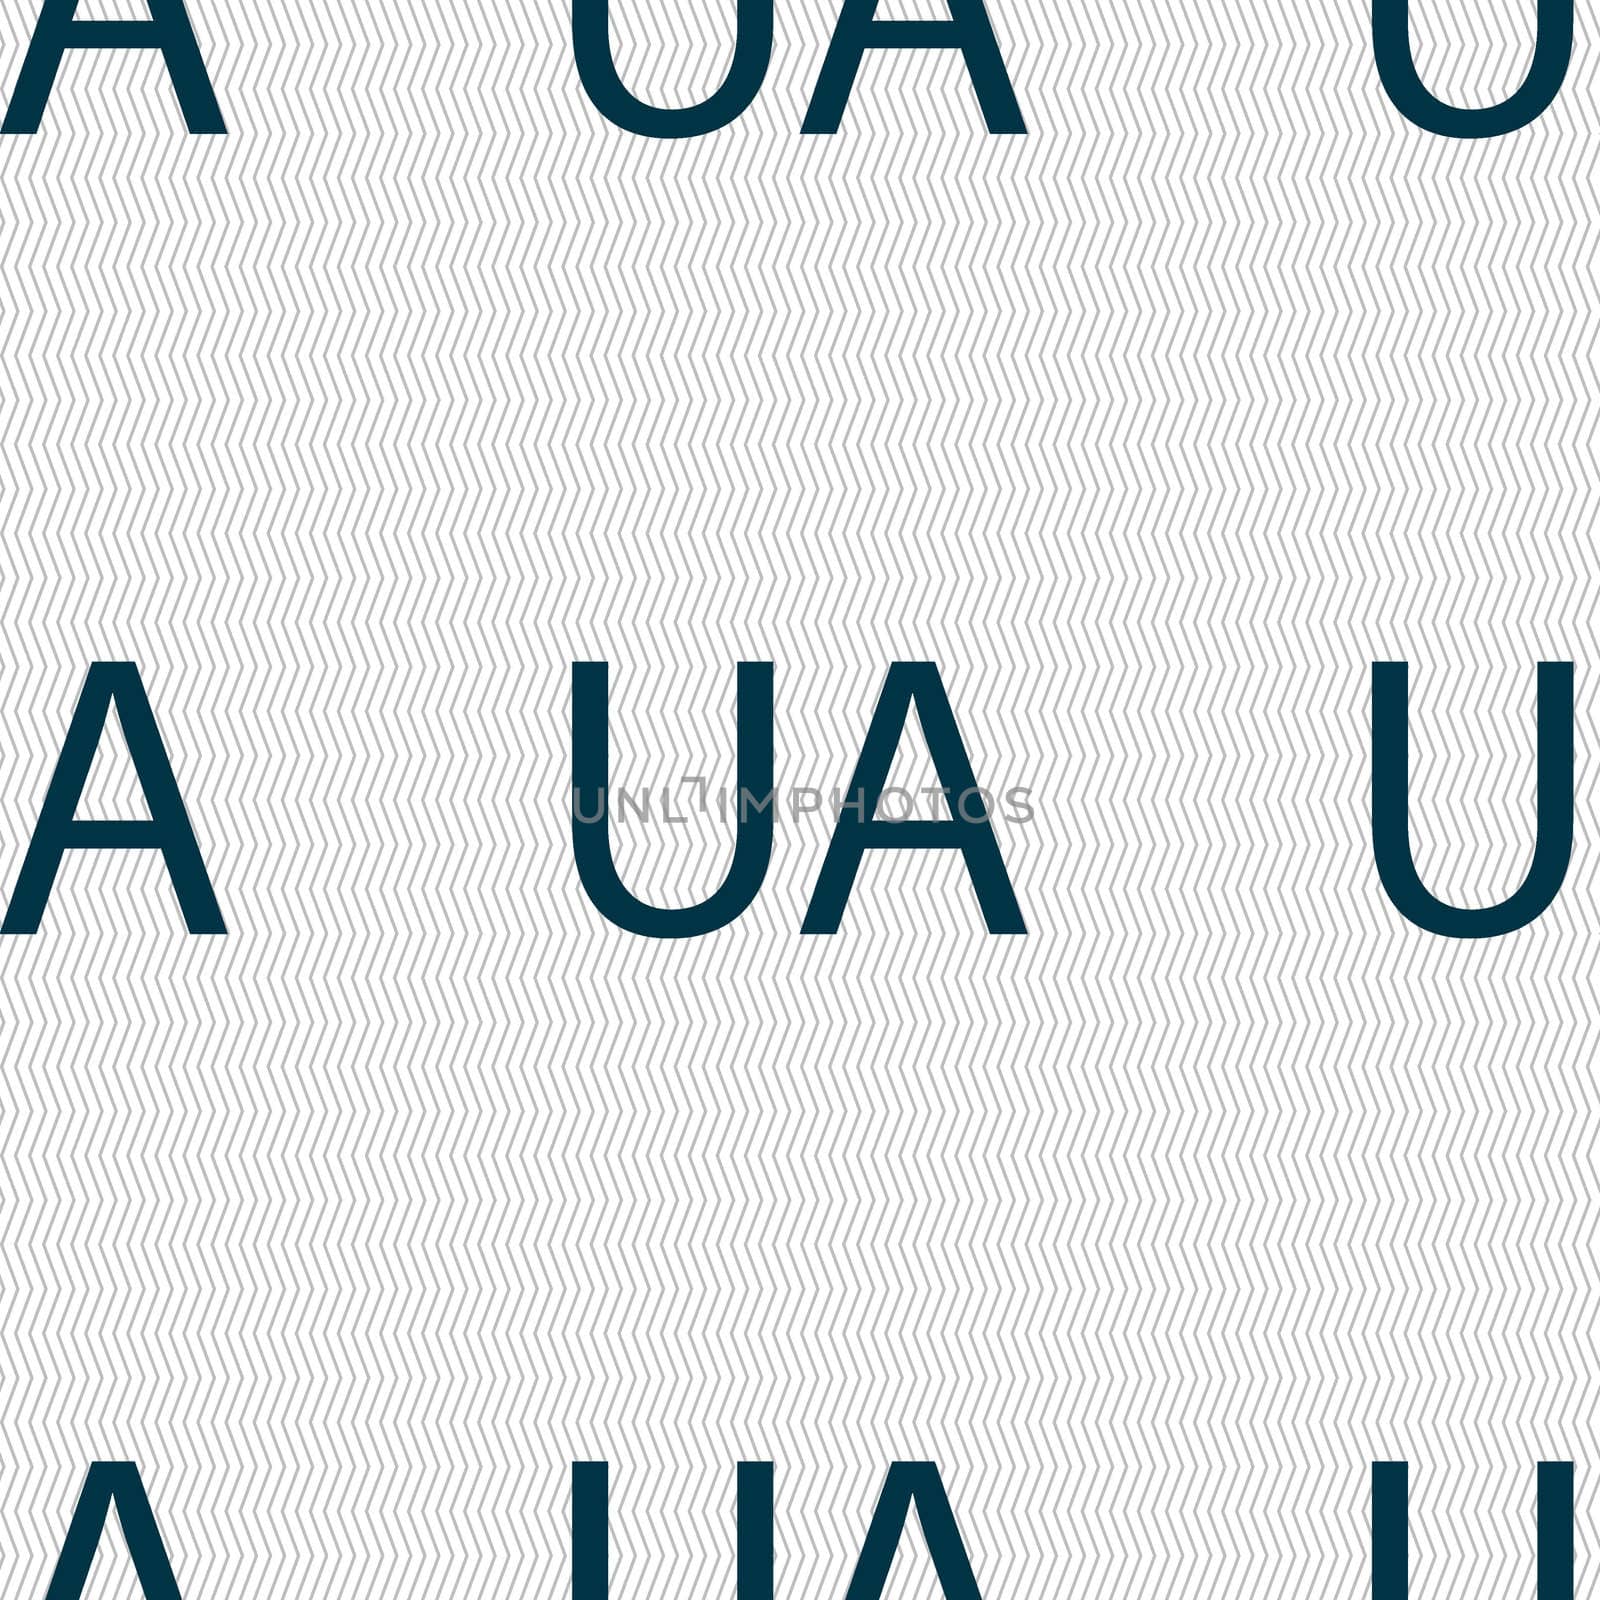 Ukraine sign icon. symbol. UA navigation. Seamless abstract background with geometric shapes.  by serhii_lohvyniuk